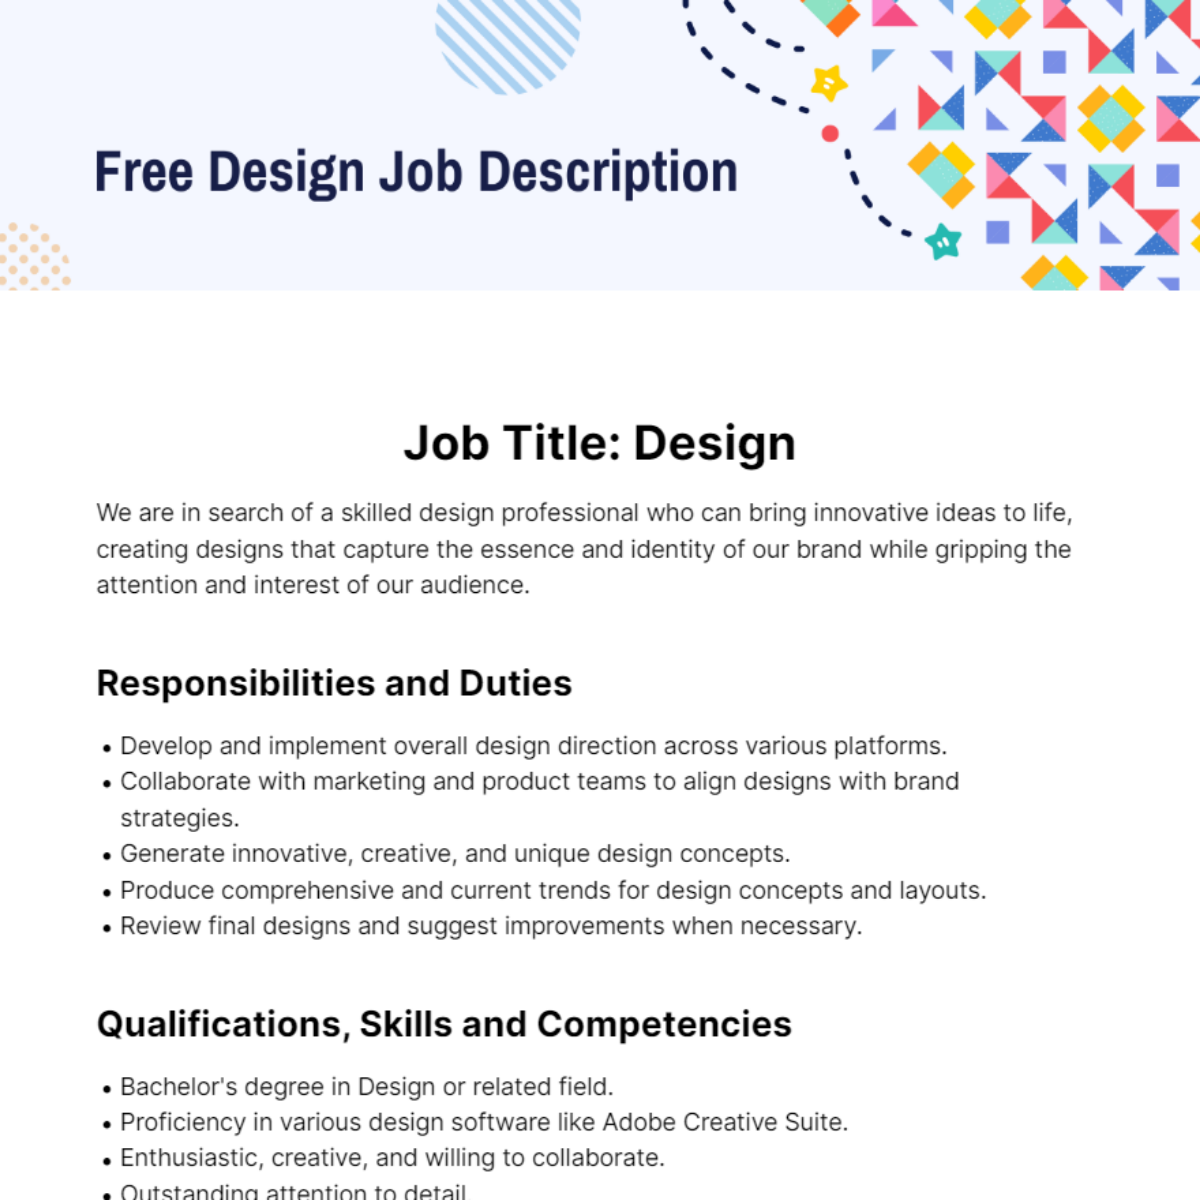 Free Design Job Description Template